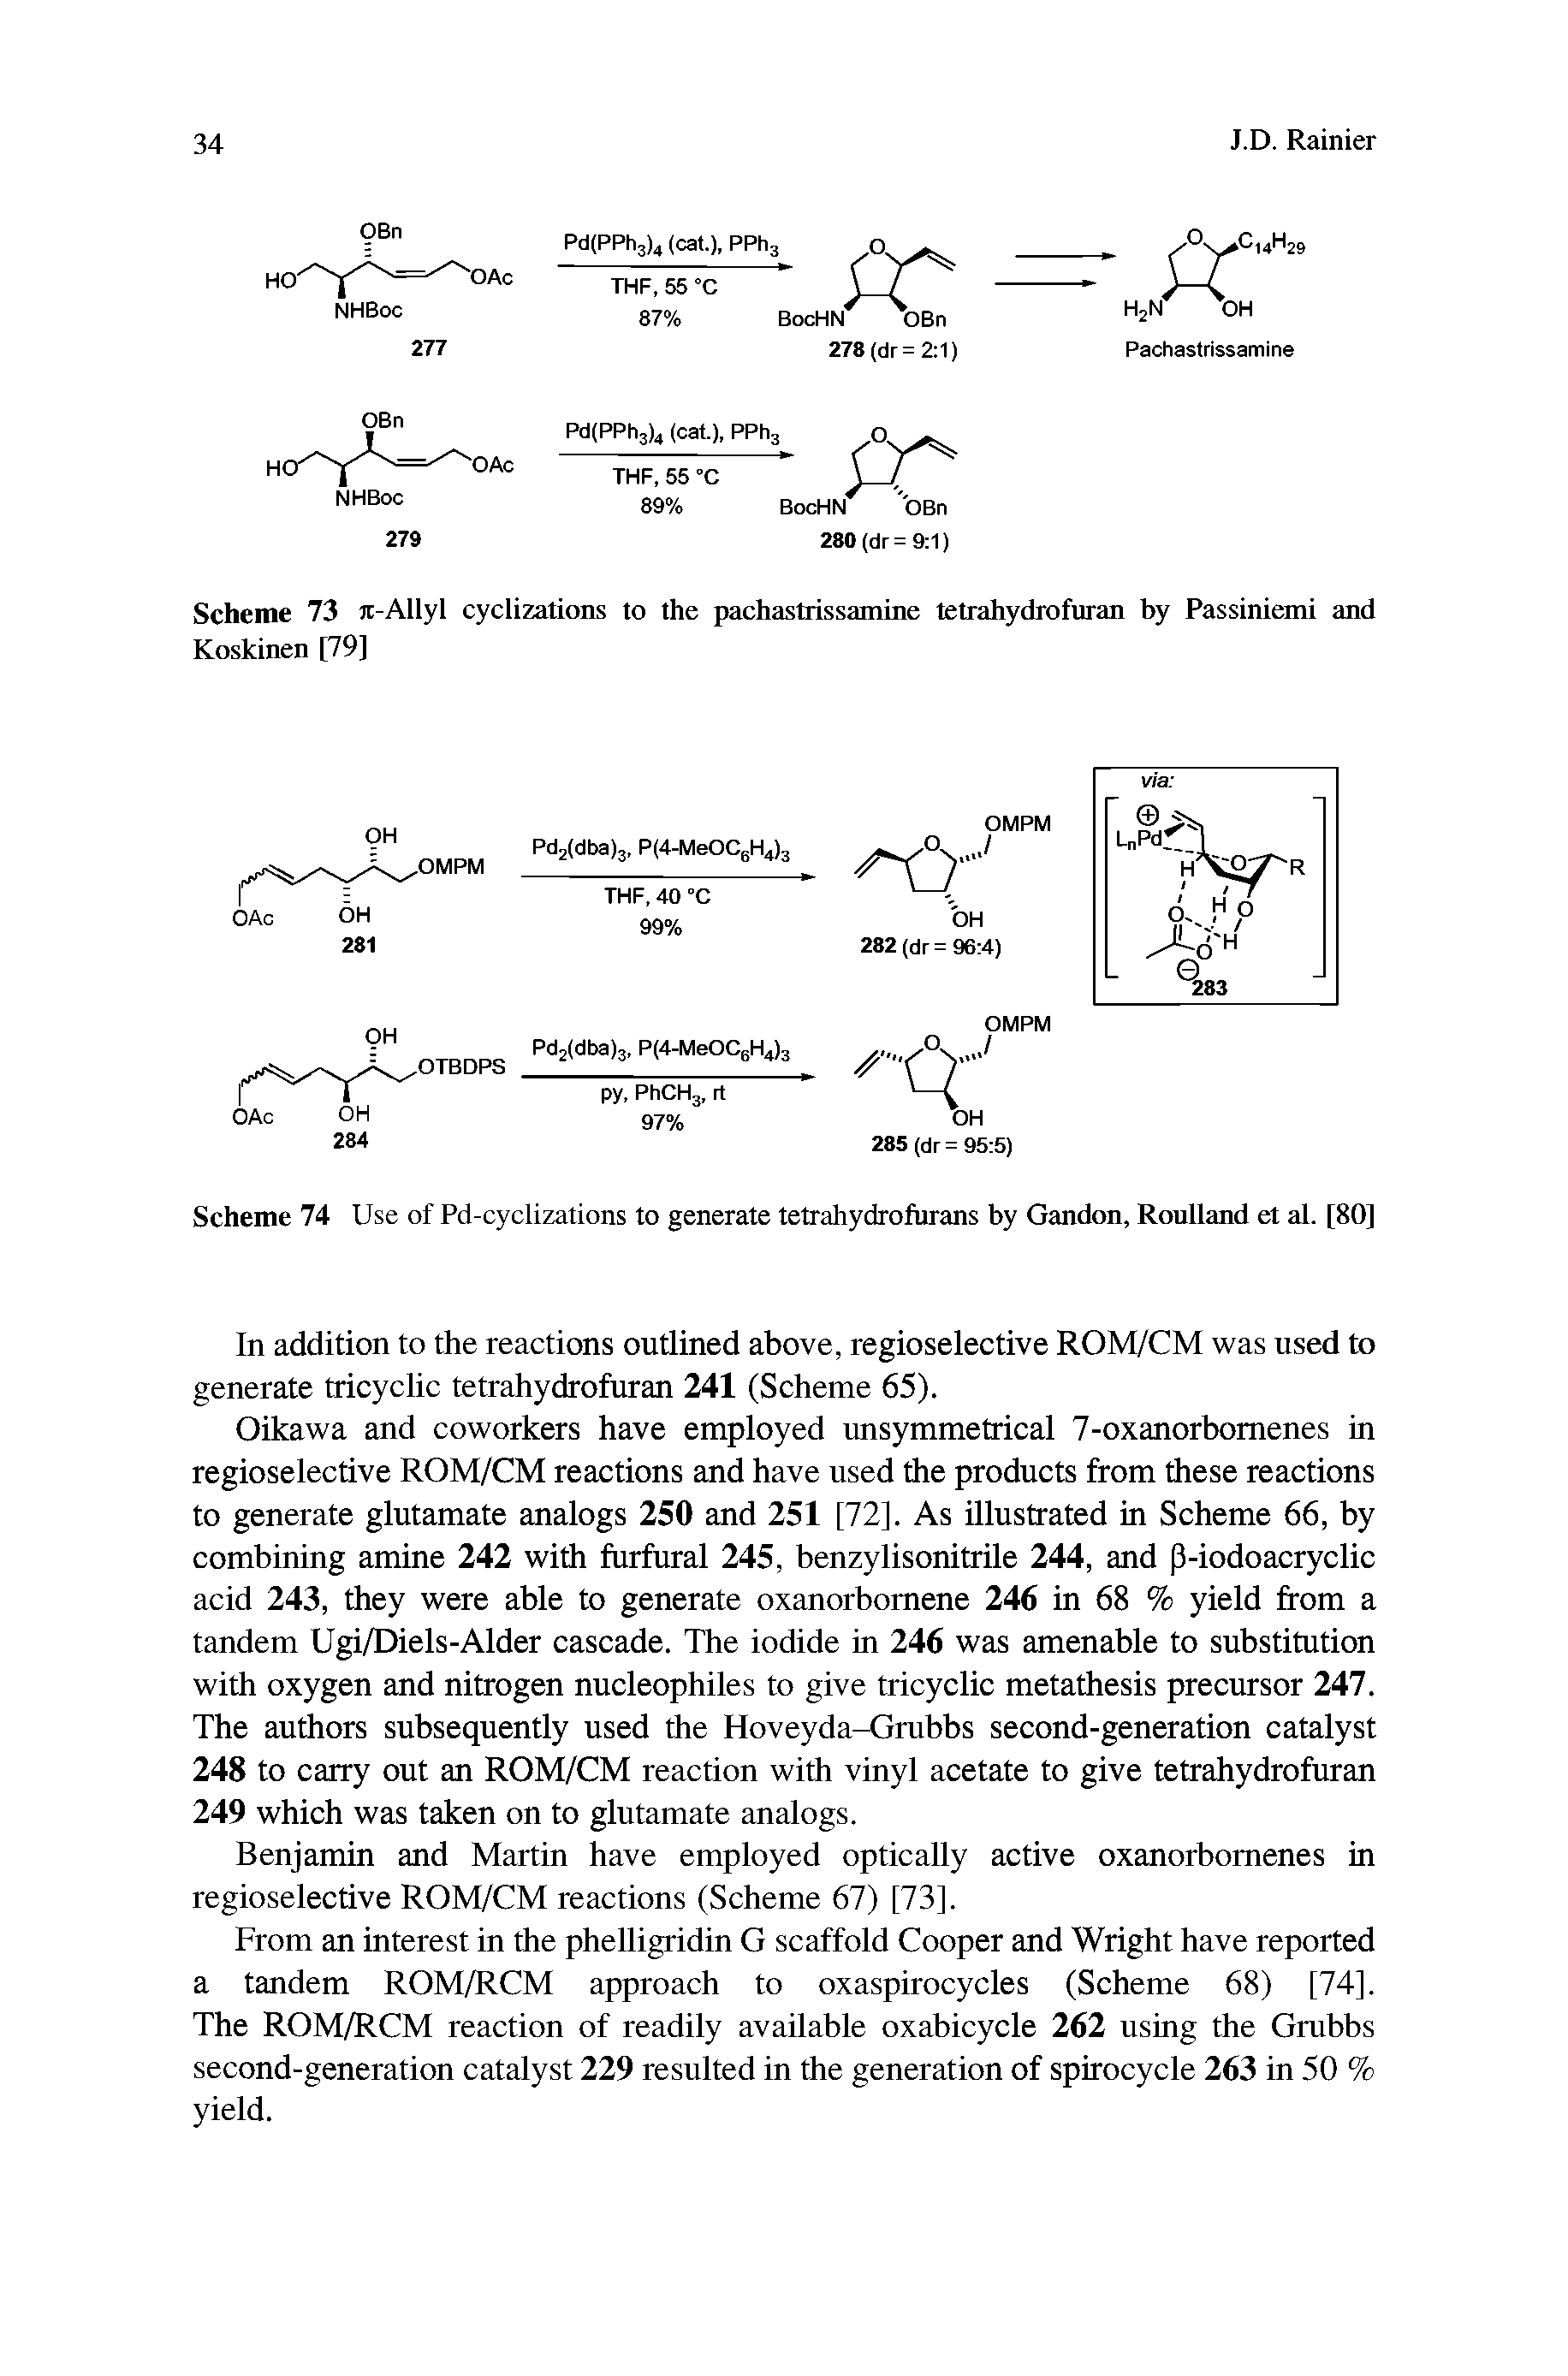 Scheme 73 Jt-Allyl cyclizations to the pachastrissamine tetrahydrofuran by Passiniemi and Koskinen [79]...